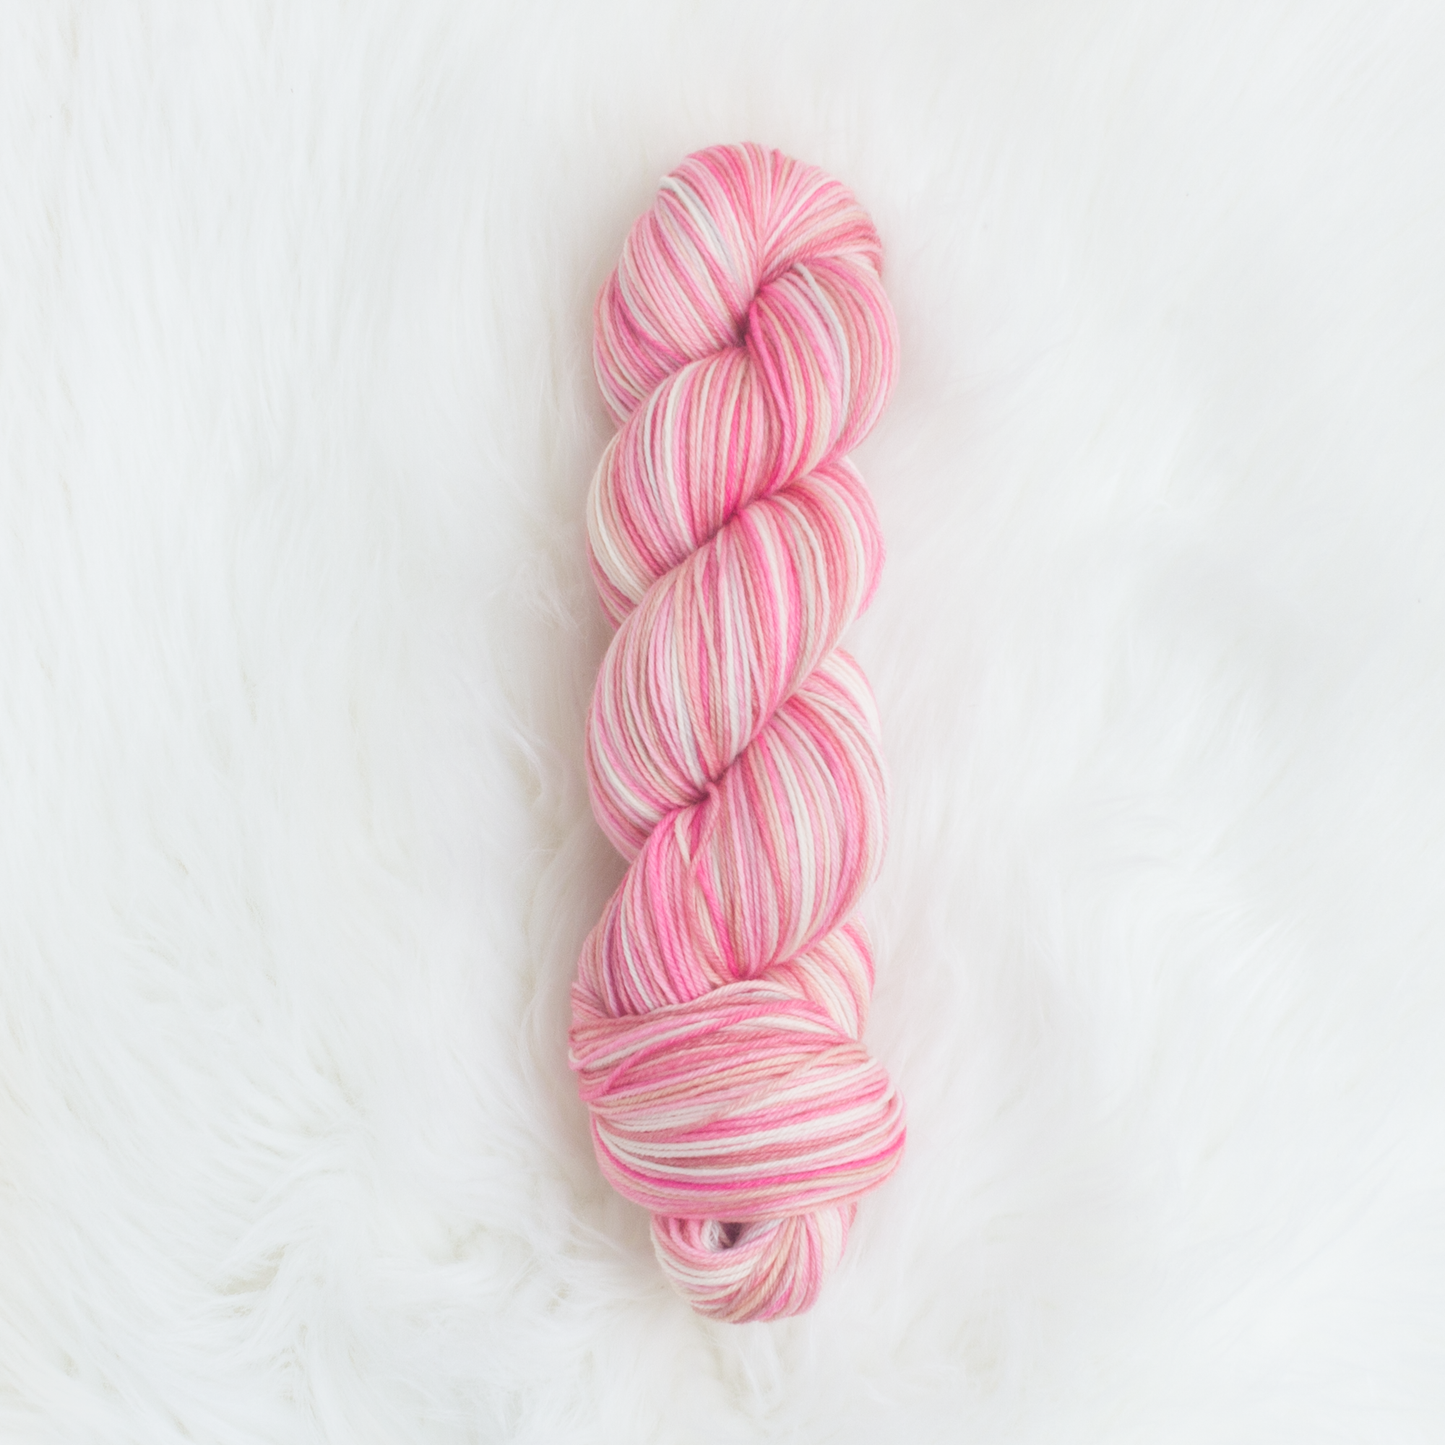 Cherry Blossom Sakura March birth month sock yarn pink white gauge dye works knitting crochet